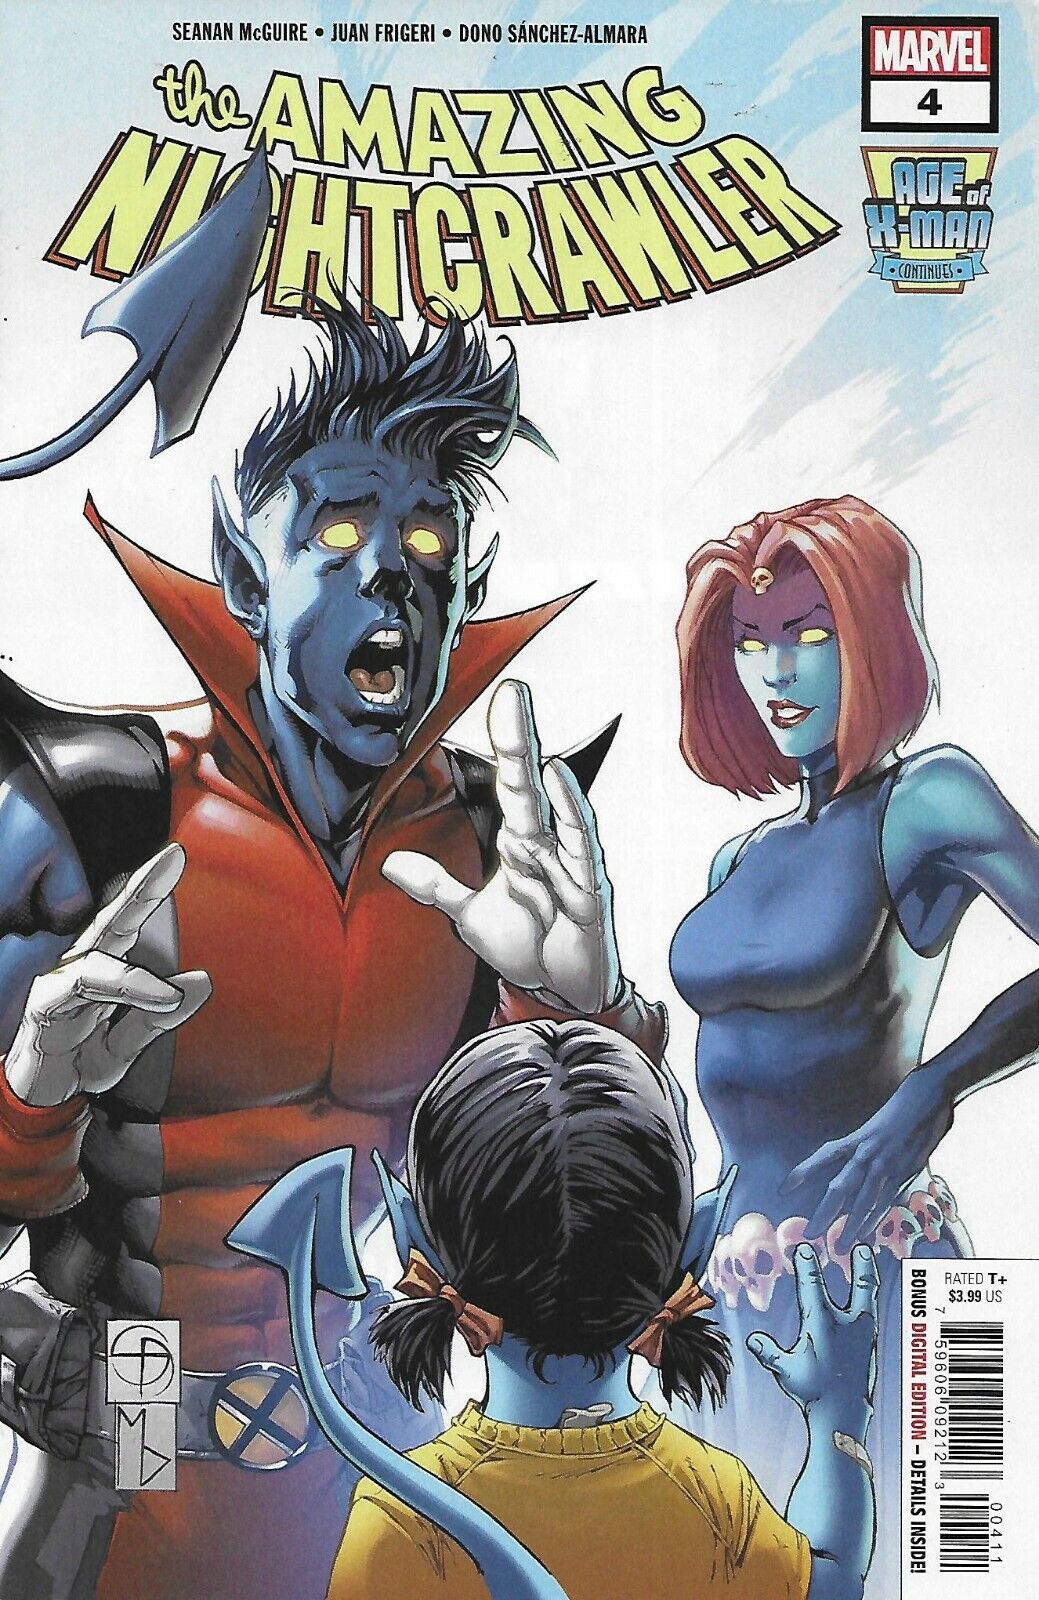 AGE OF X-MAN AMAZING NIGHTCRAWLER #4 (OF 5) 2019